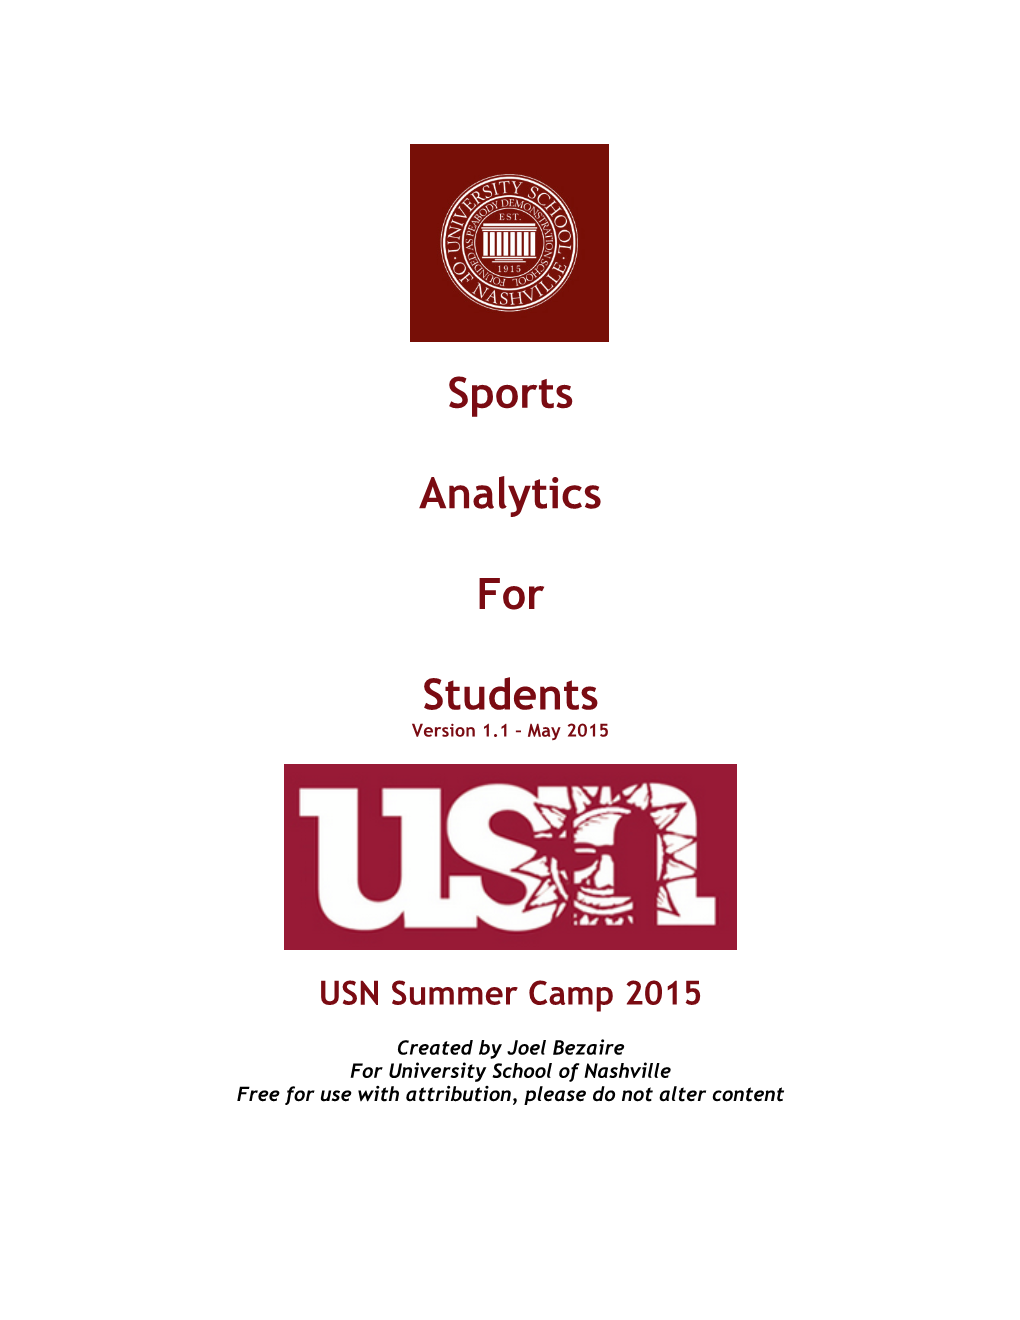 Sports Analytics for Students Curriculum by Joel Bezaire University School of Nashville, Nashville, TN